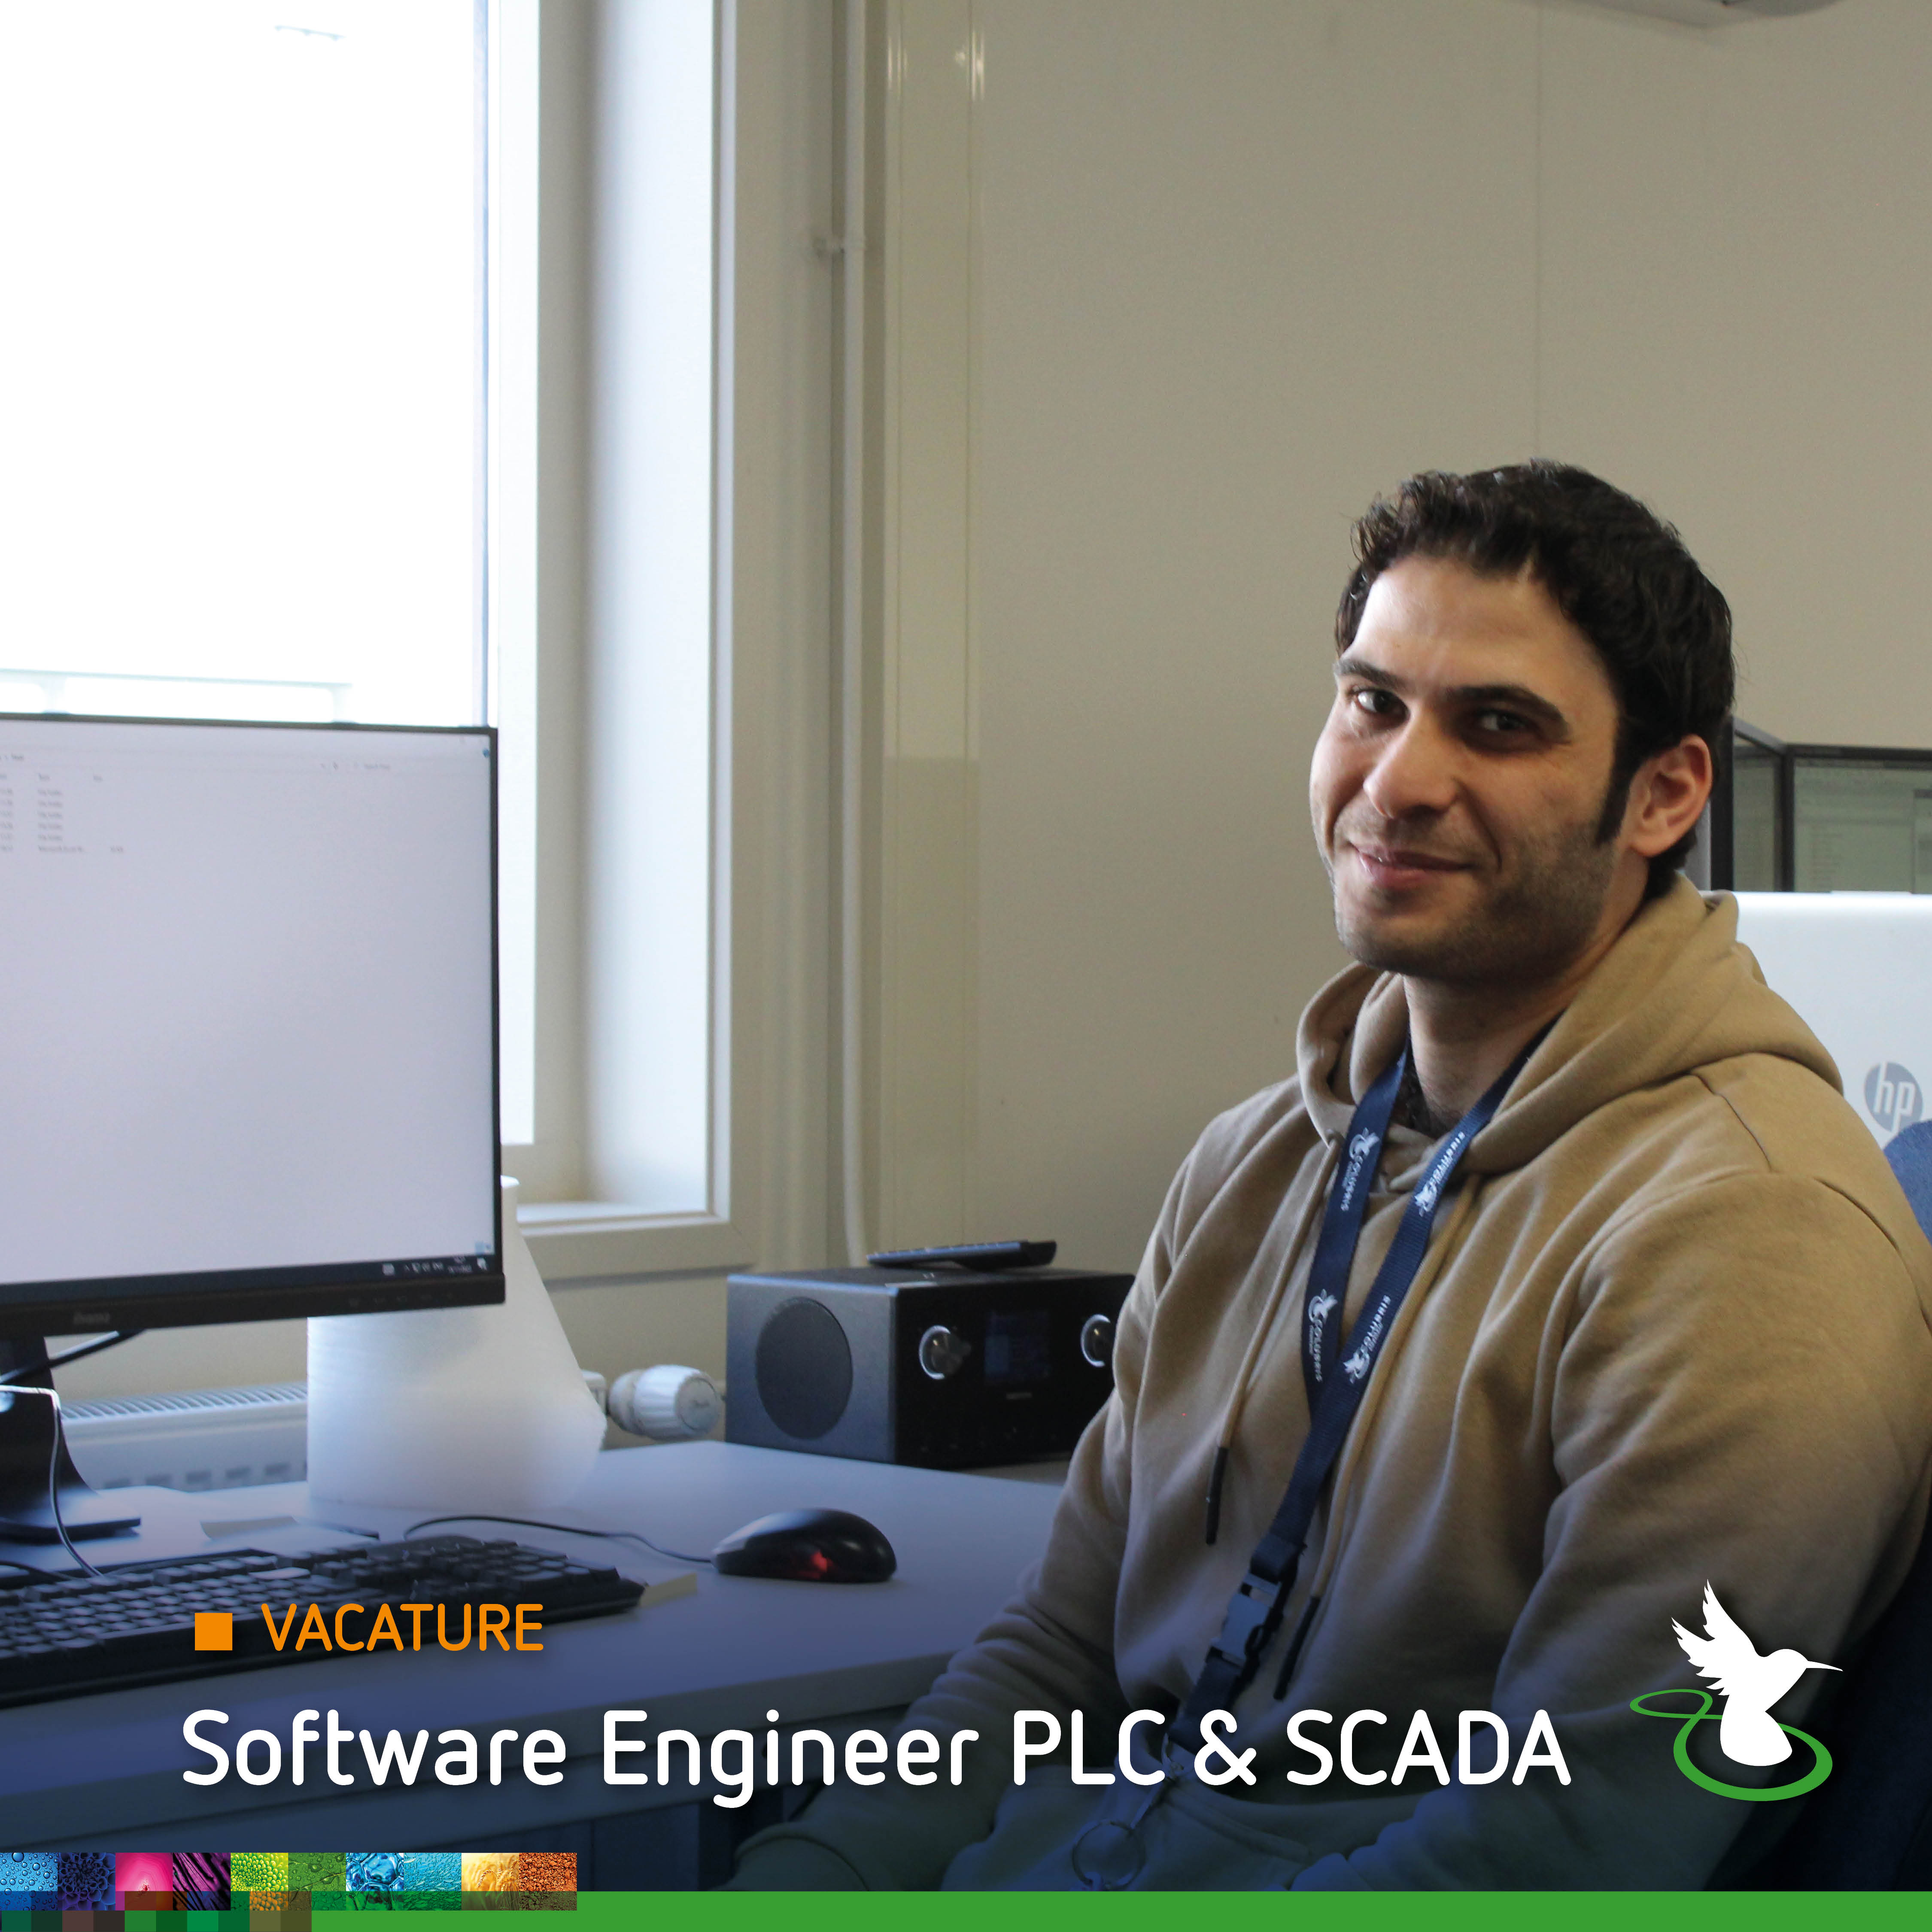 Vacancy Software Engineer PLC & SCADA